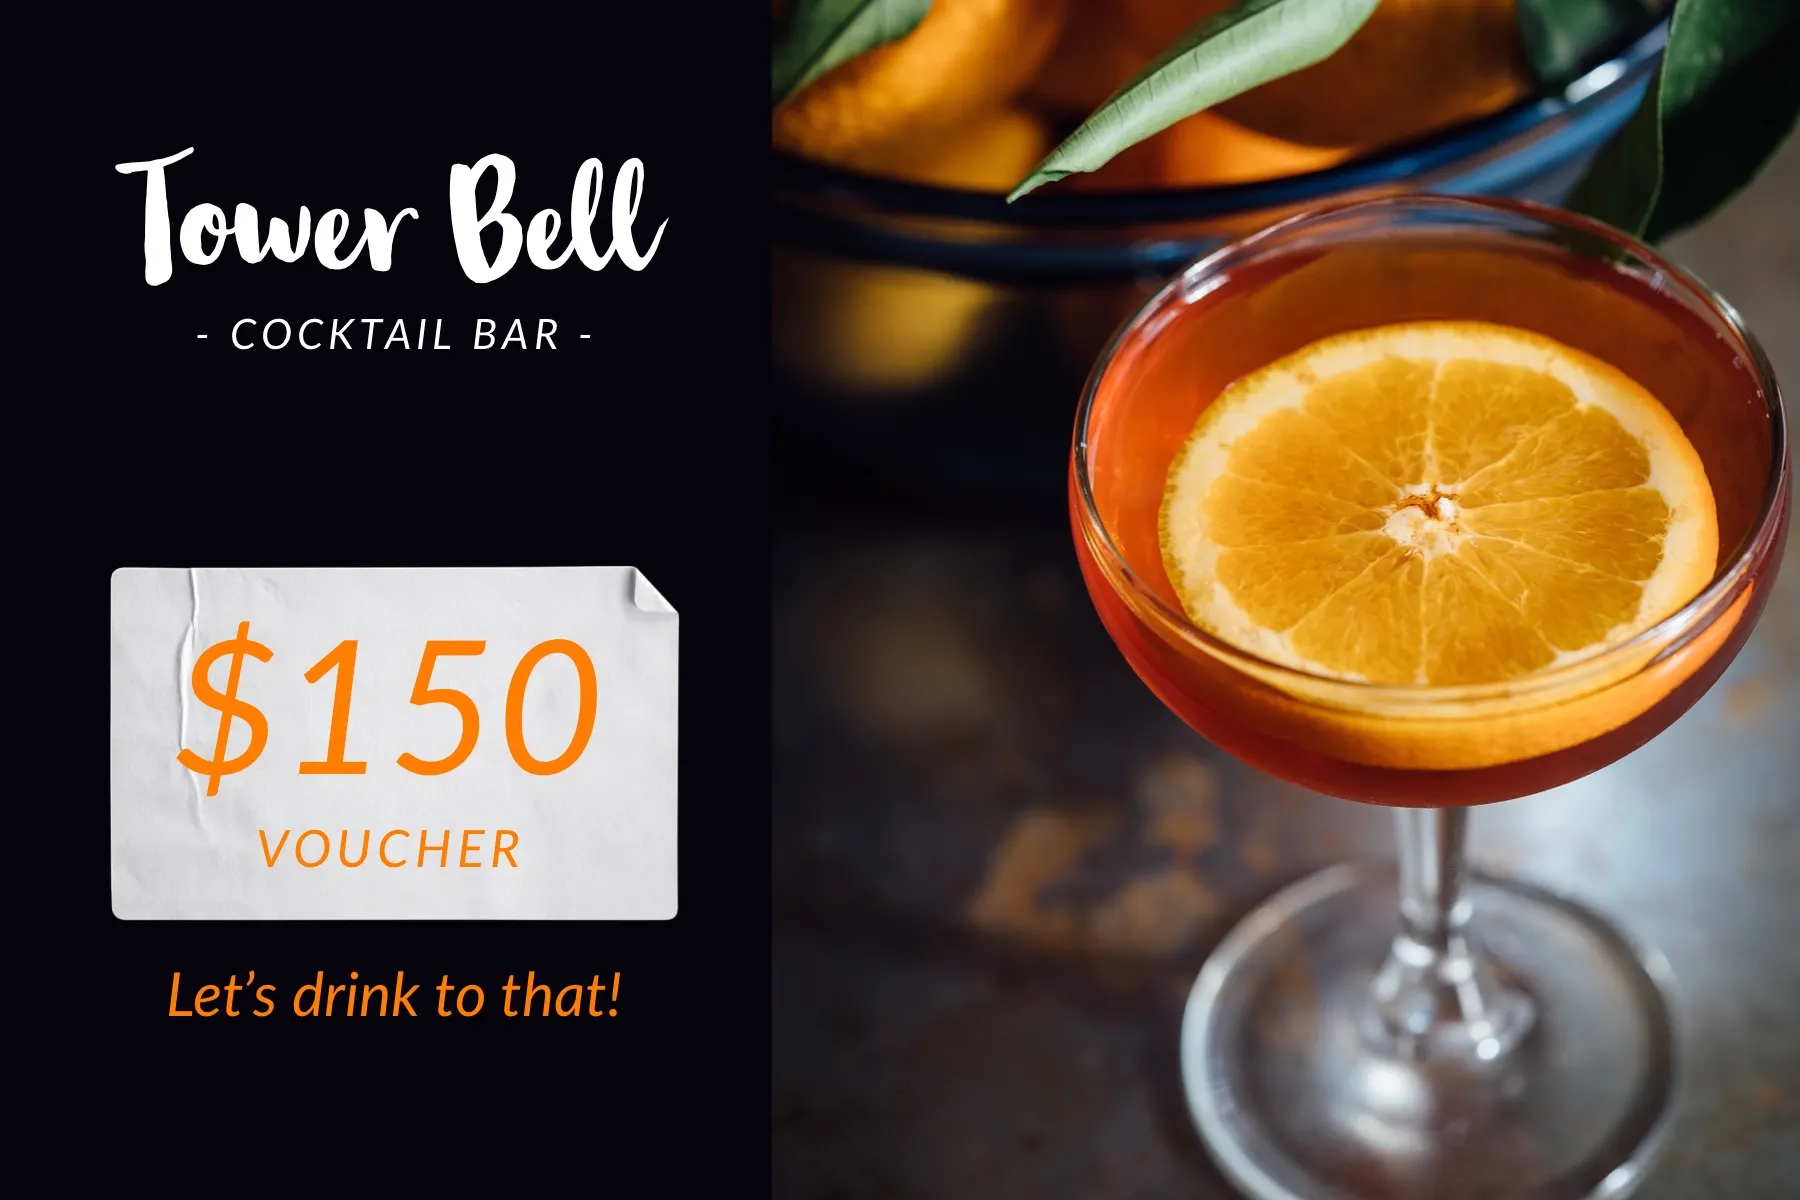 Black Tower Bell Cocktail Bar Gift Voucher